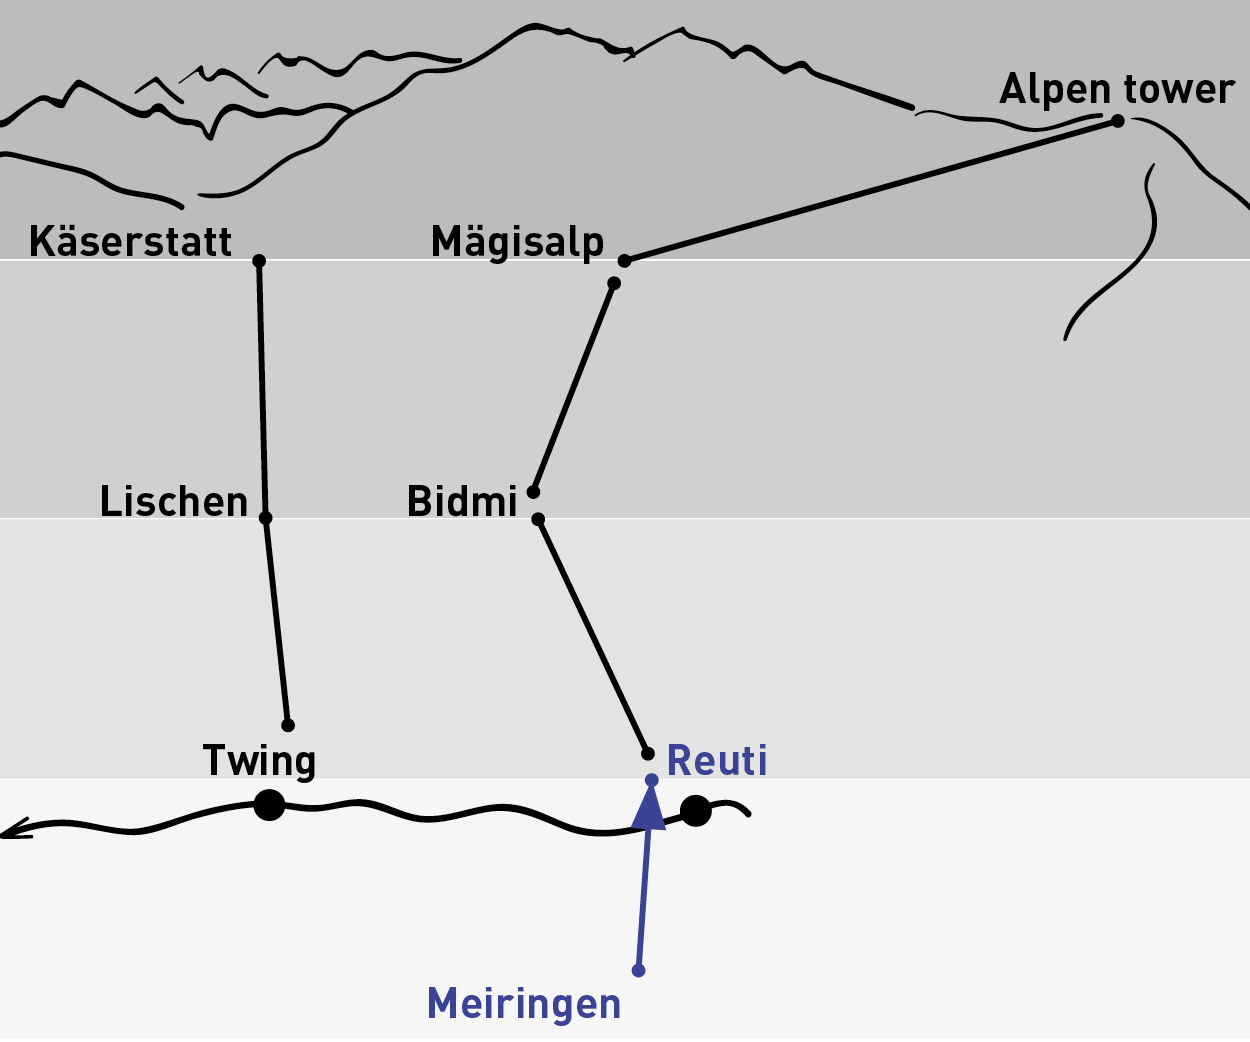 Meiringen – Reuti | One-way trip